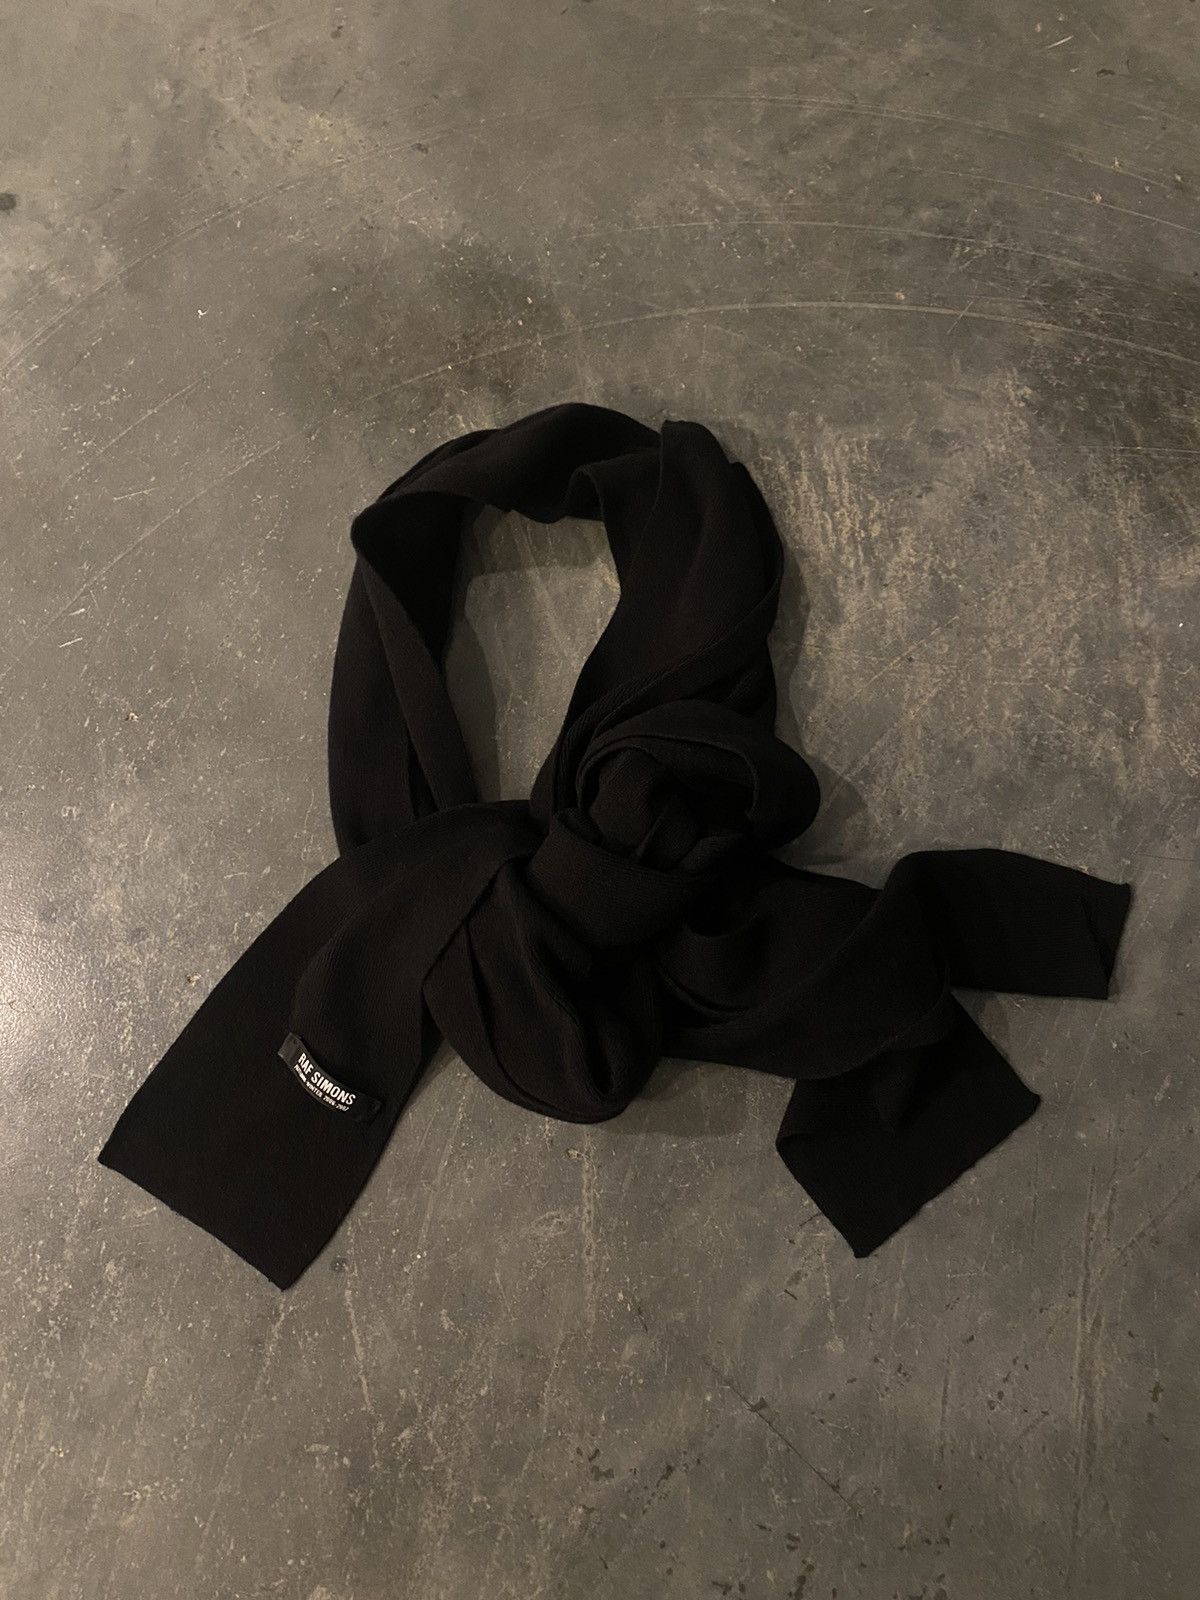 Raf Simons extra long mohair-blend scarf - Black